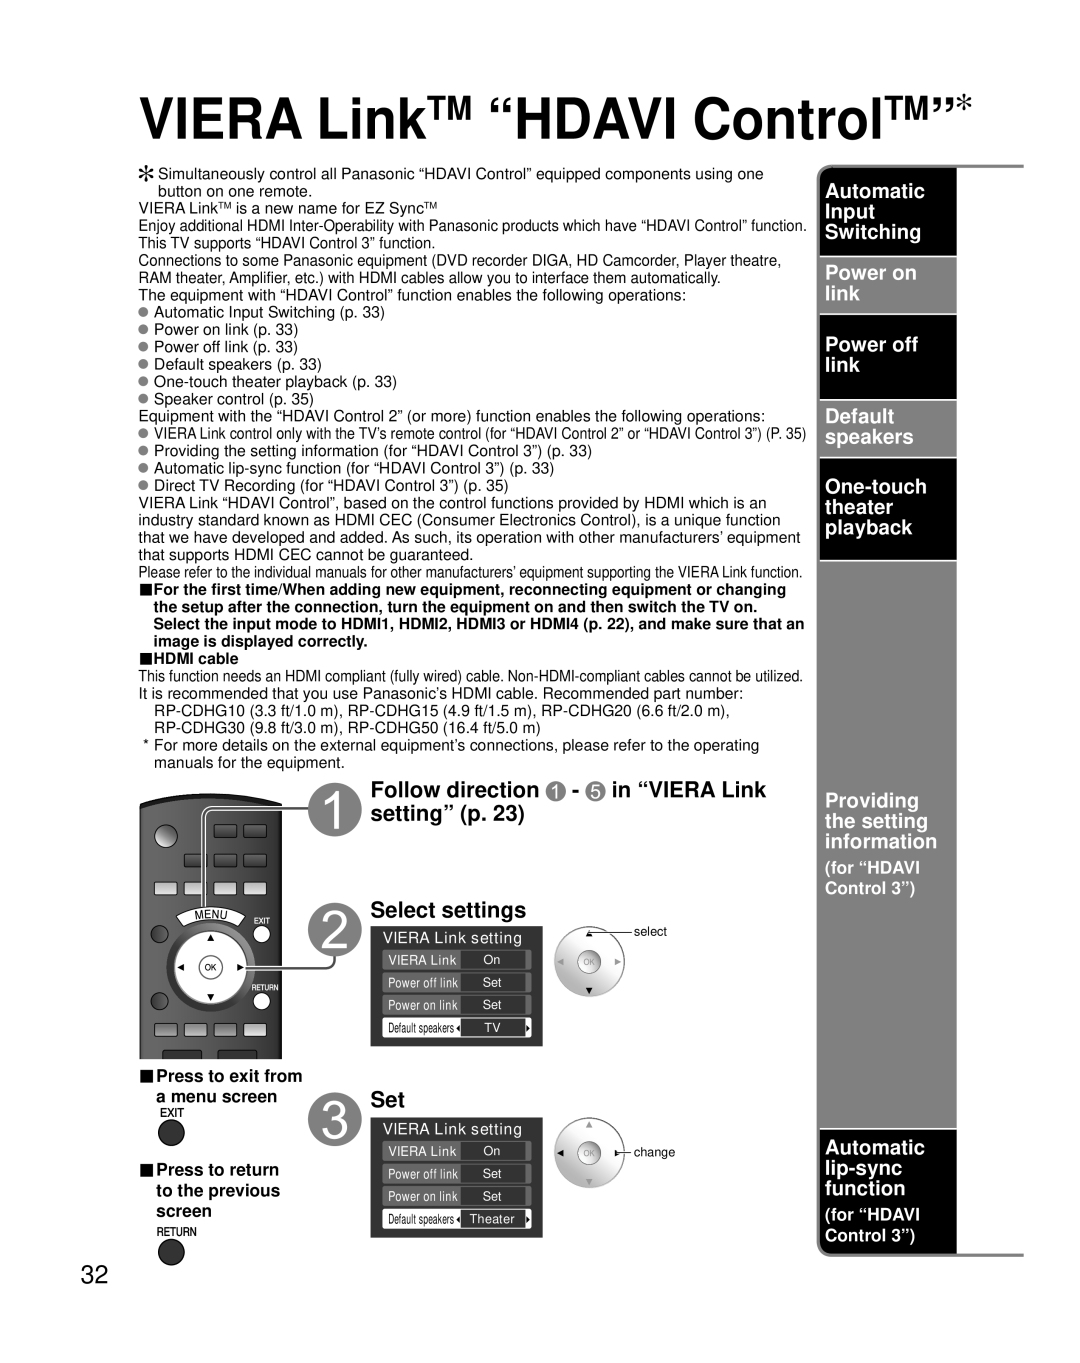 Panasonic TH 65PZ850U VIERA LinkTM “HDAVI ControlTM”, Follow direction, in “VIERA Link, setting” p, Select settings 